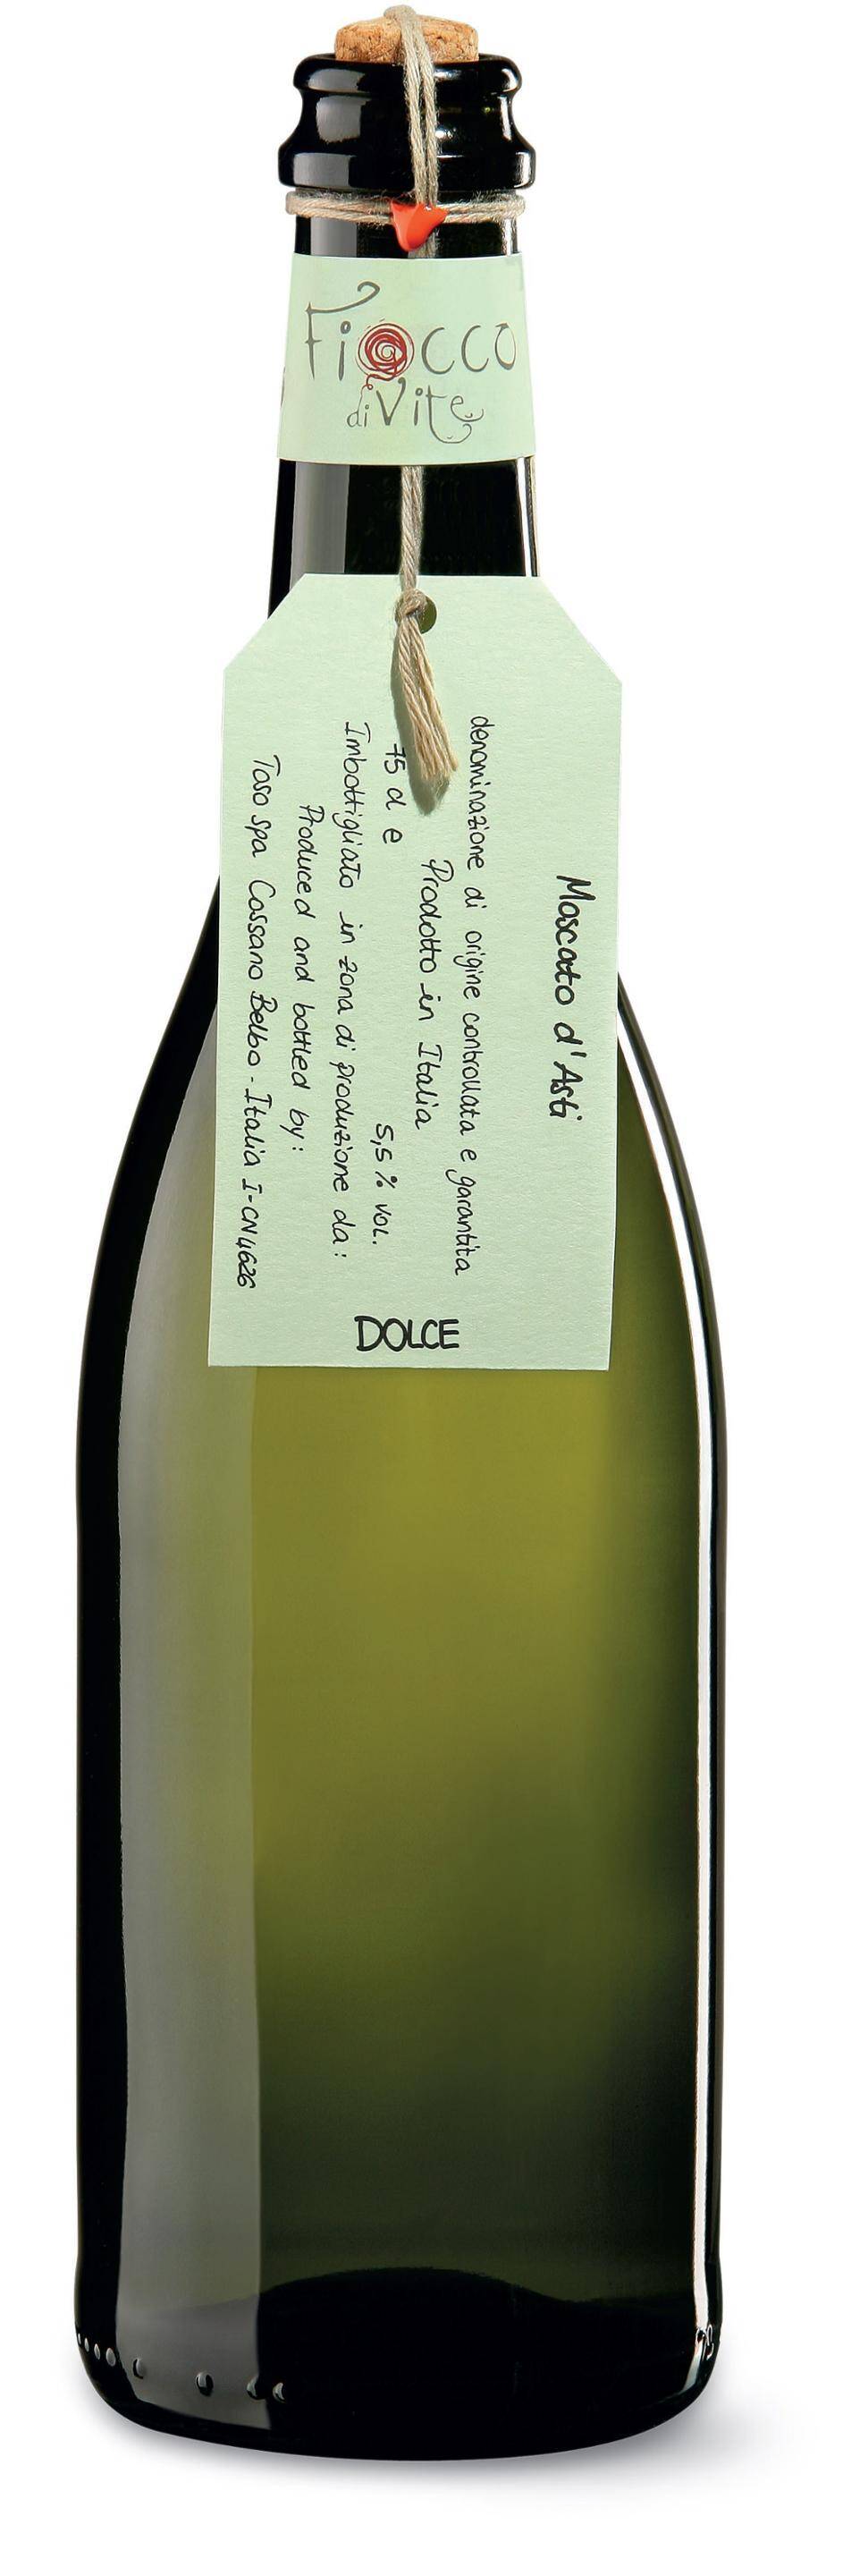 Wino włoskie Toso Fiocco Divite Moscato d'Asti DOCG frizzante 5,5% BPS MUS 750ml/6